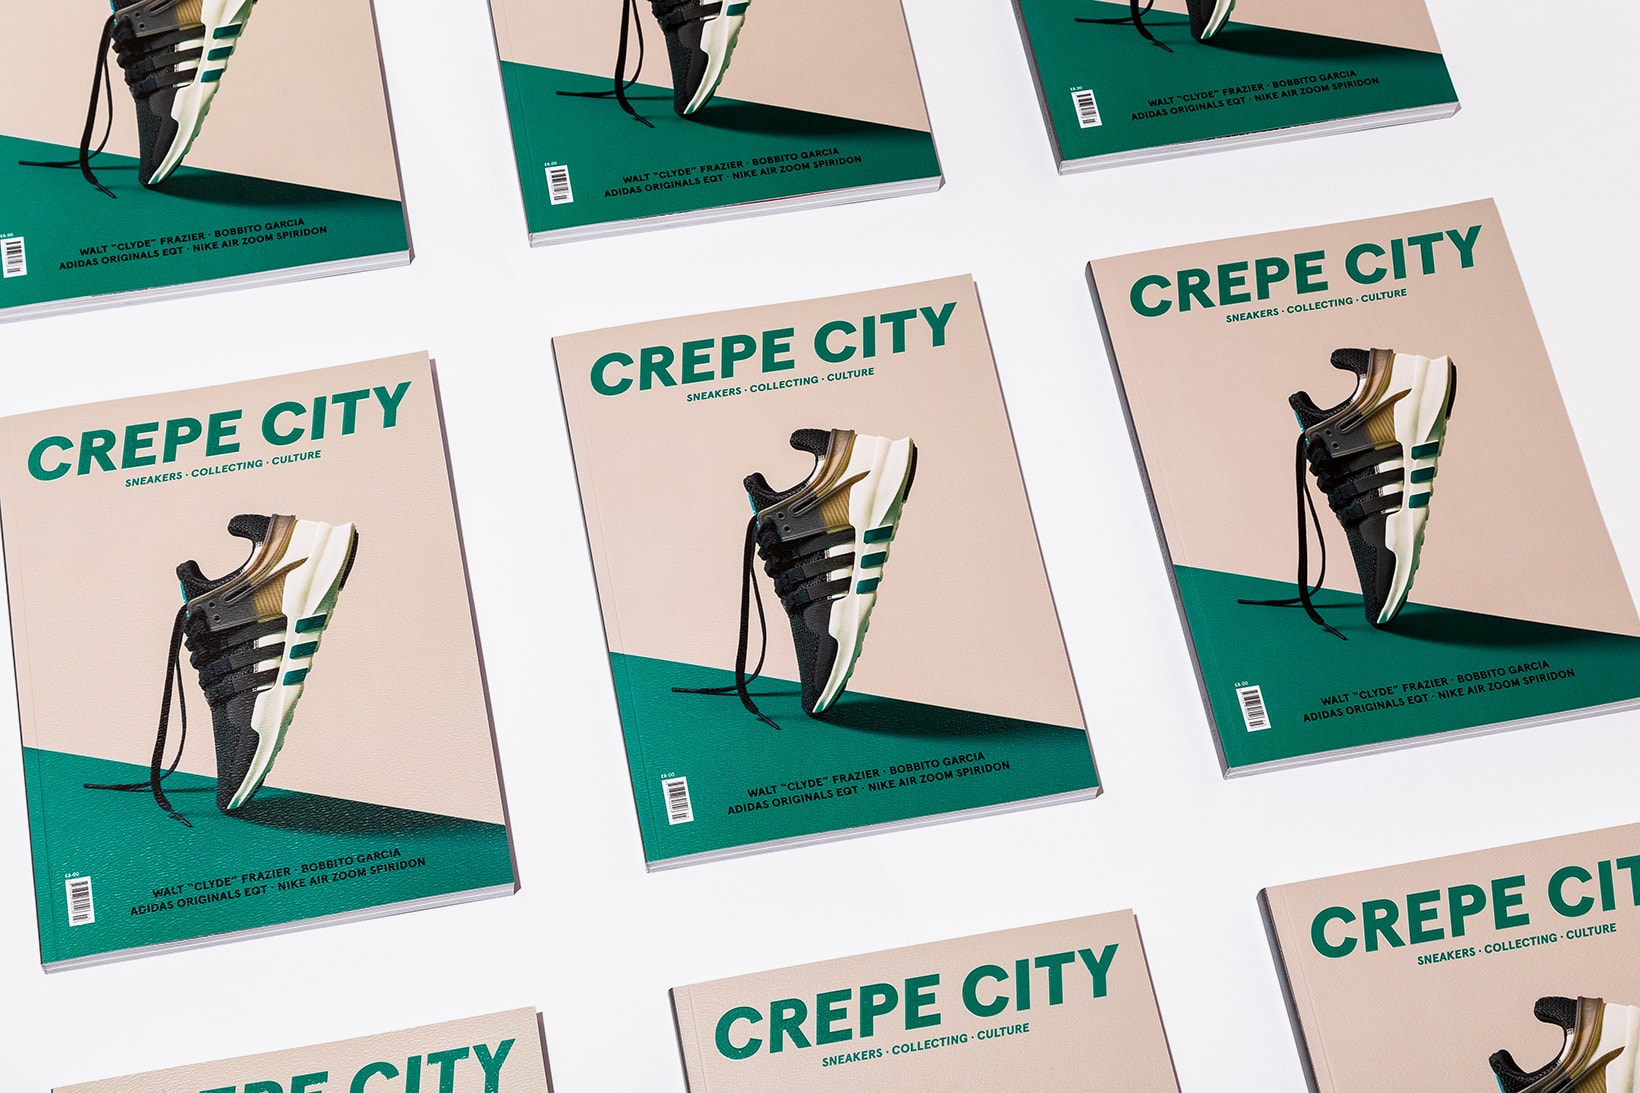 CREPE CITY Magazine Issue 03